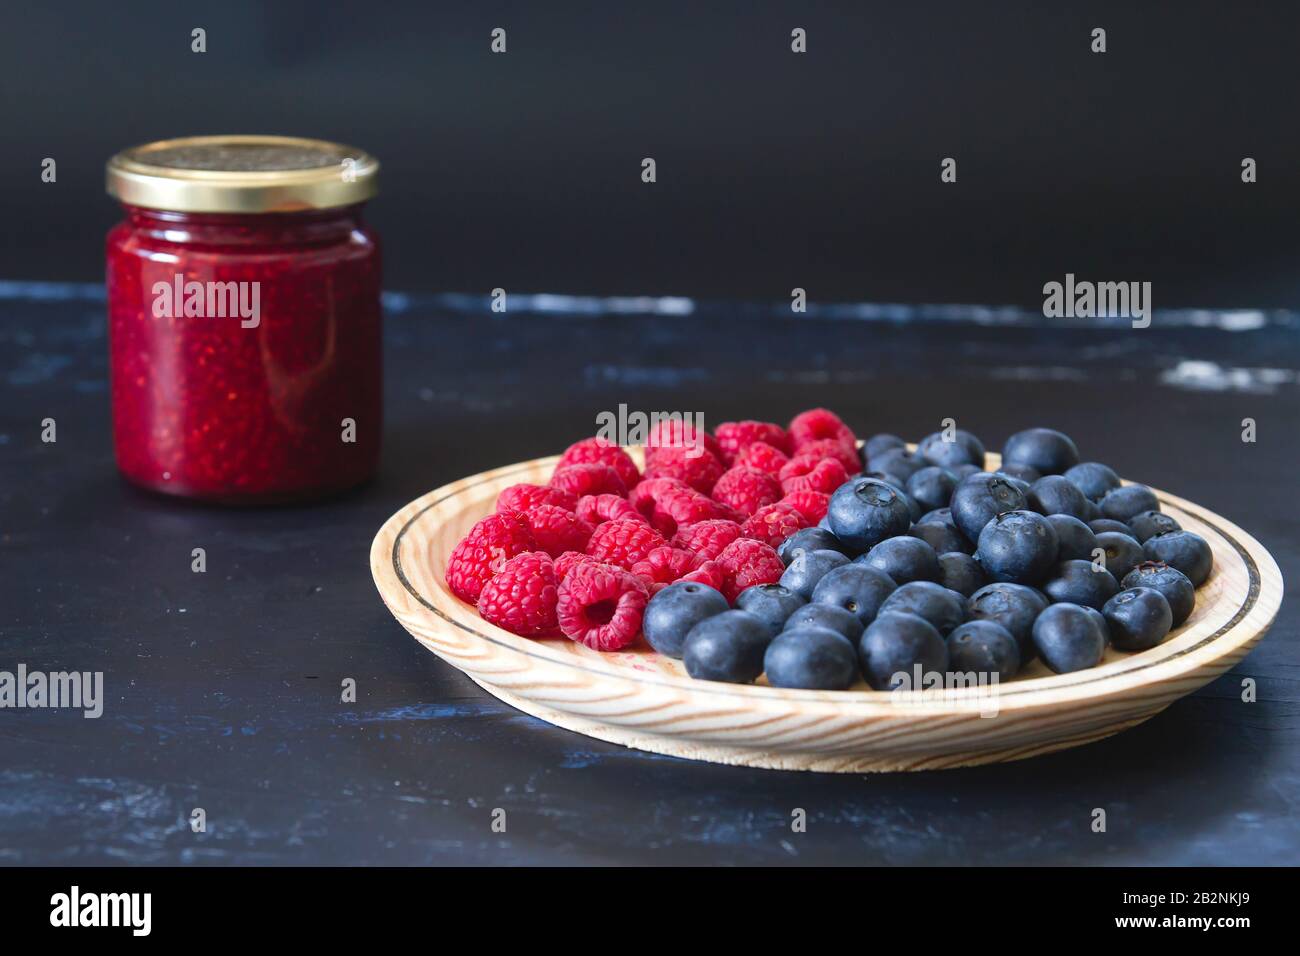 Homemade jam and fresh blueberries and raspberries on wooden dish Stock Photo